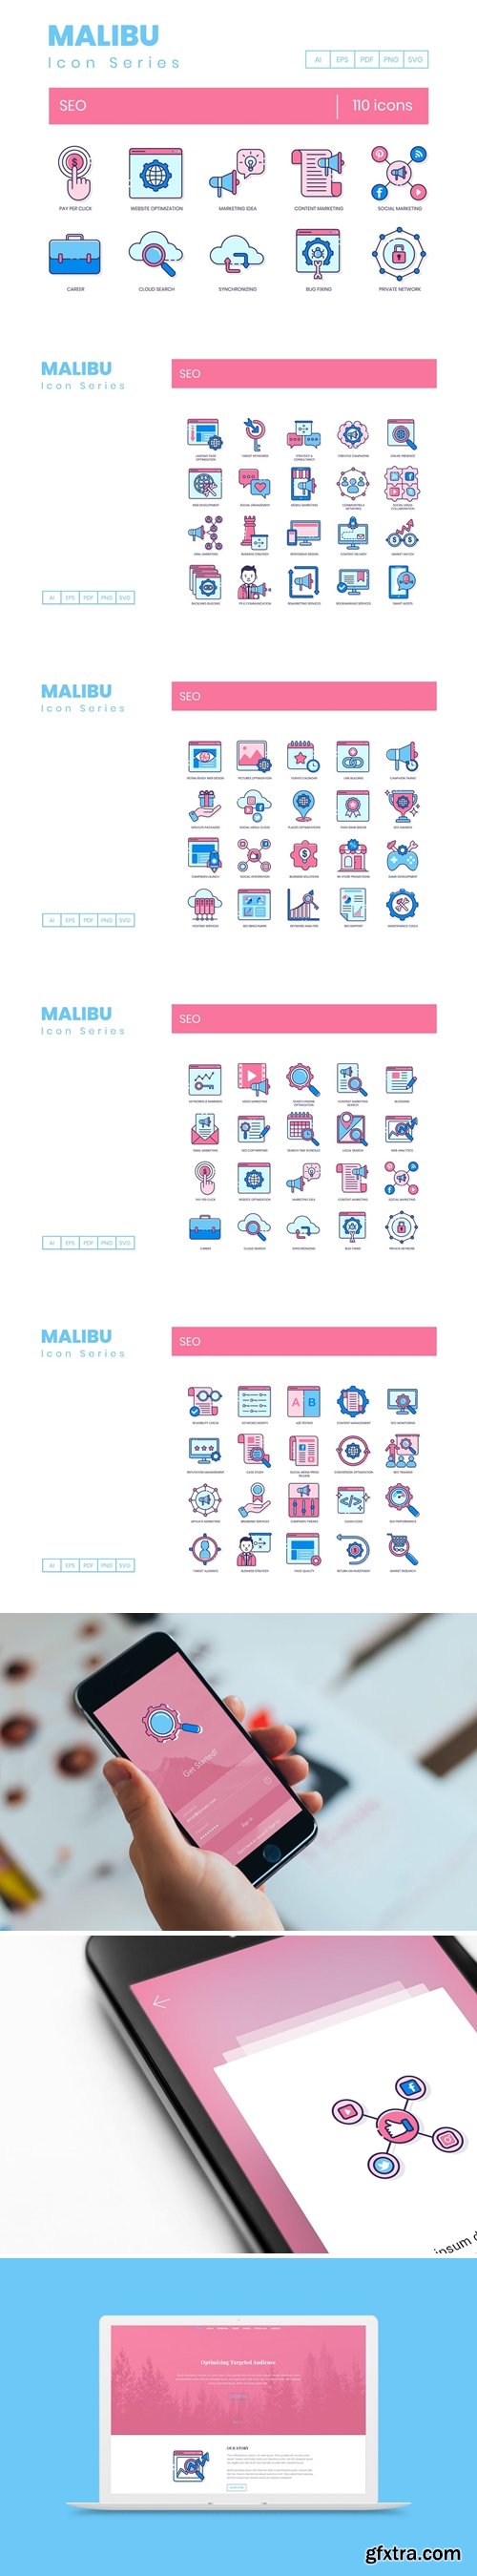 110 SEO Icons - Malibu Series